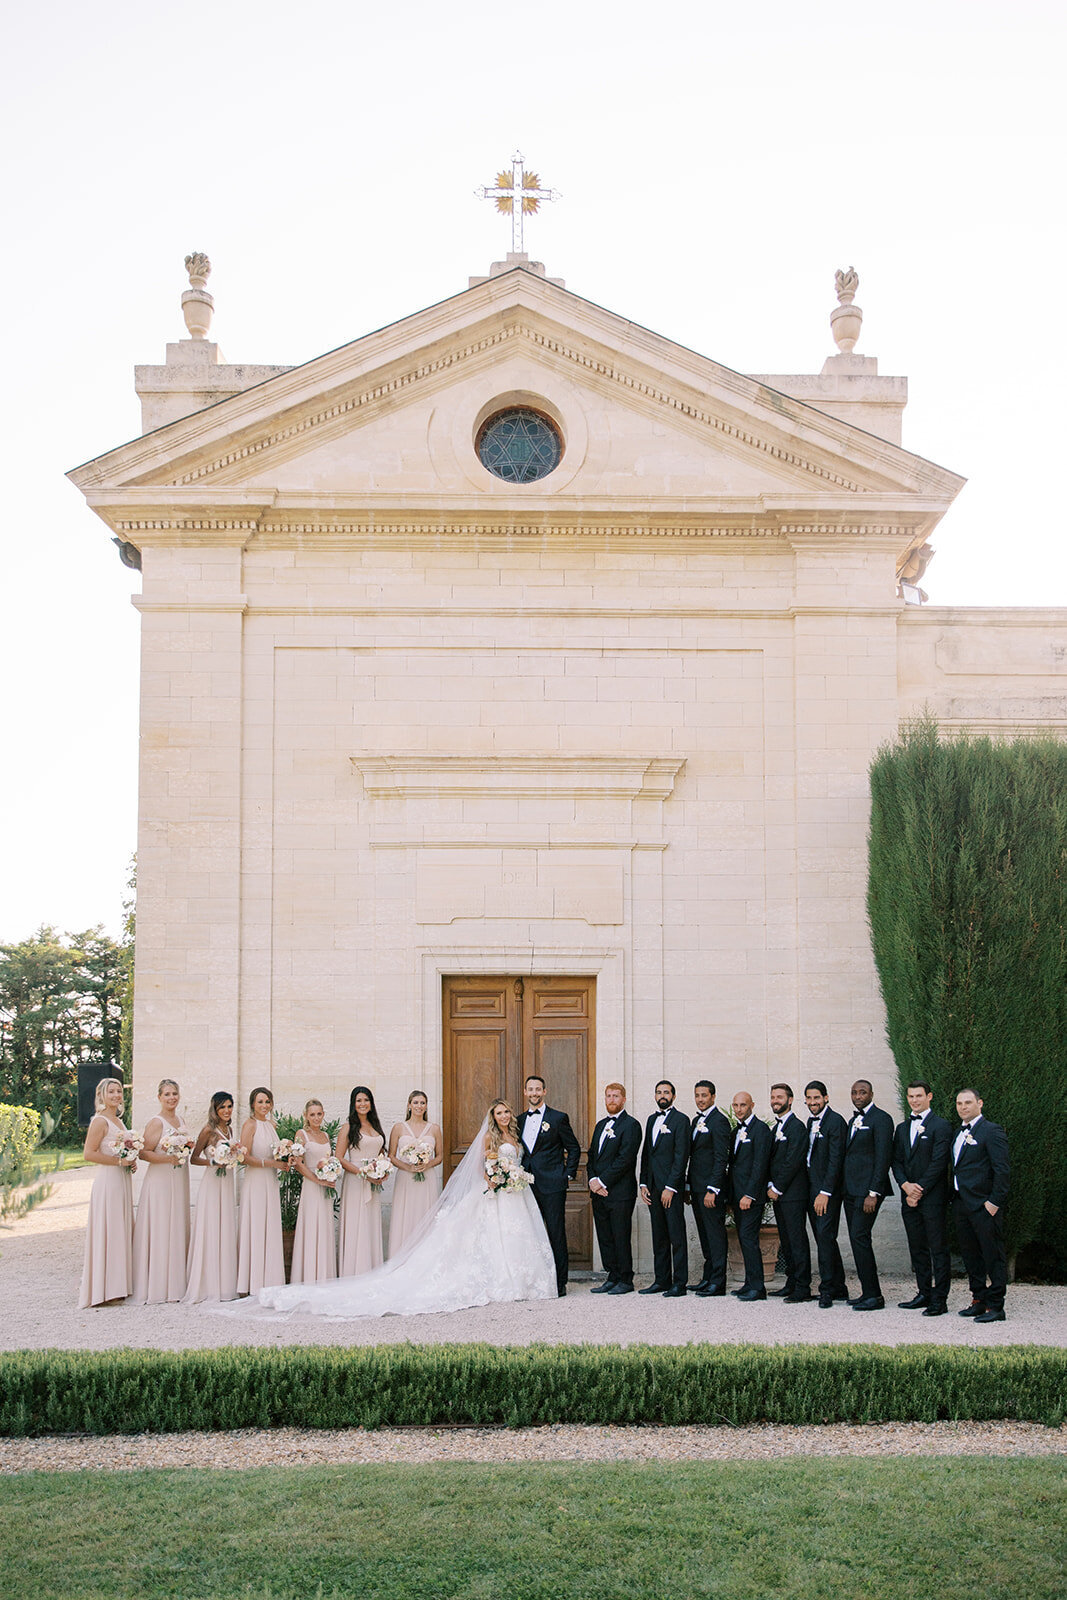 Chateau-de-Tourreau-France-wedding-by-Julia-Kaptelova_Photography-0408